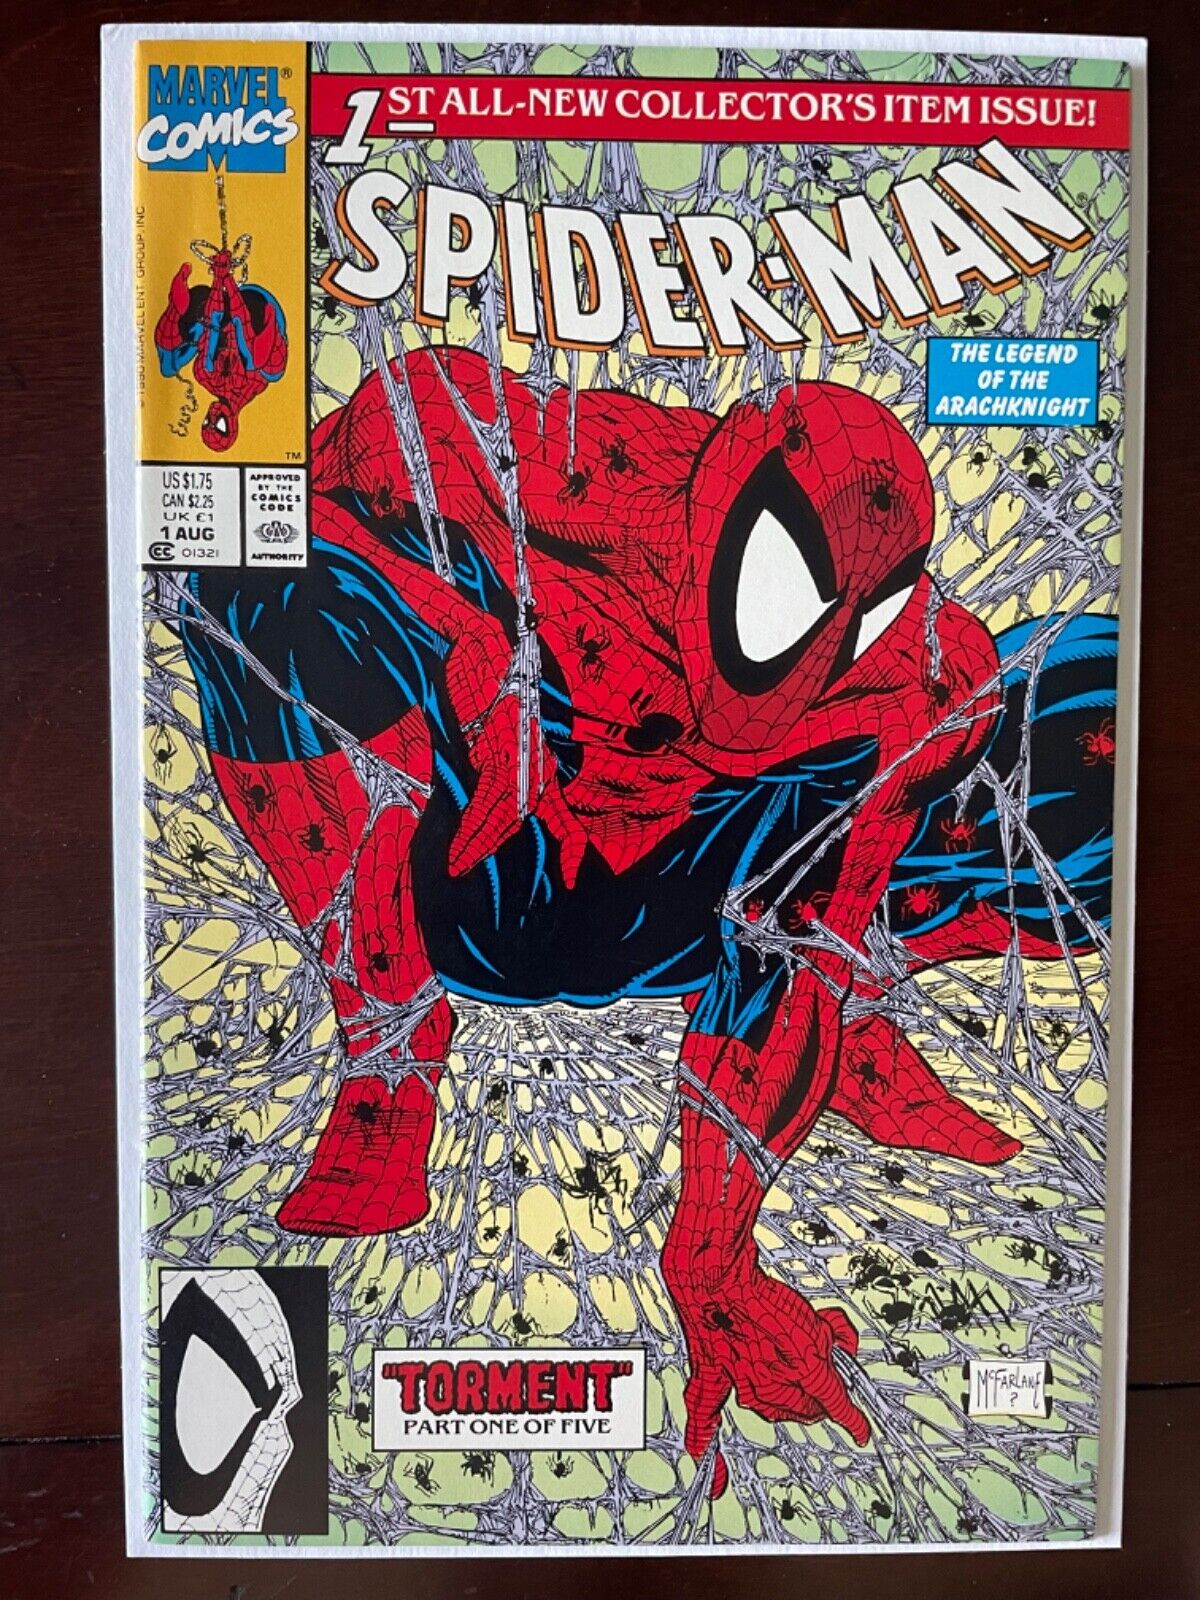 Spider-Man #1 (Marvel Comics August 1990)